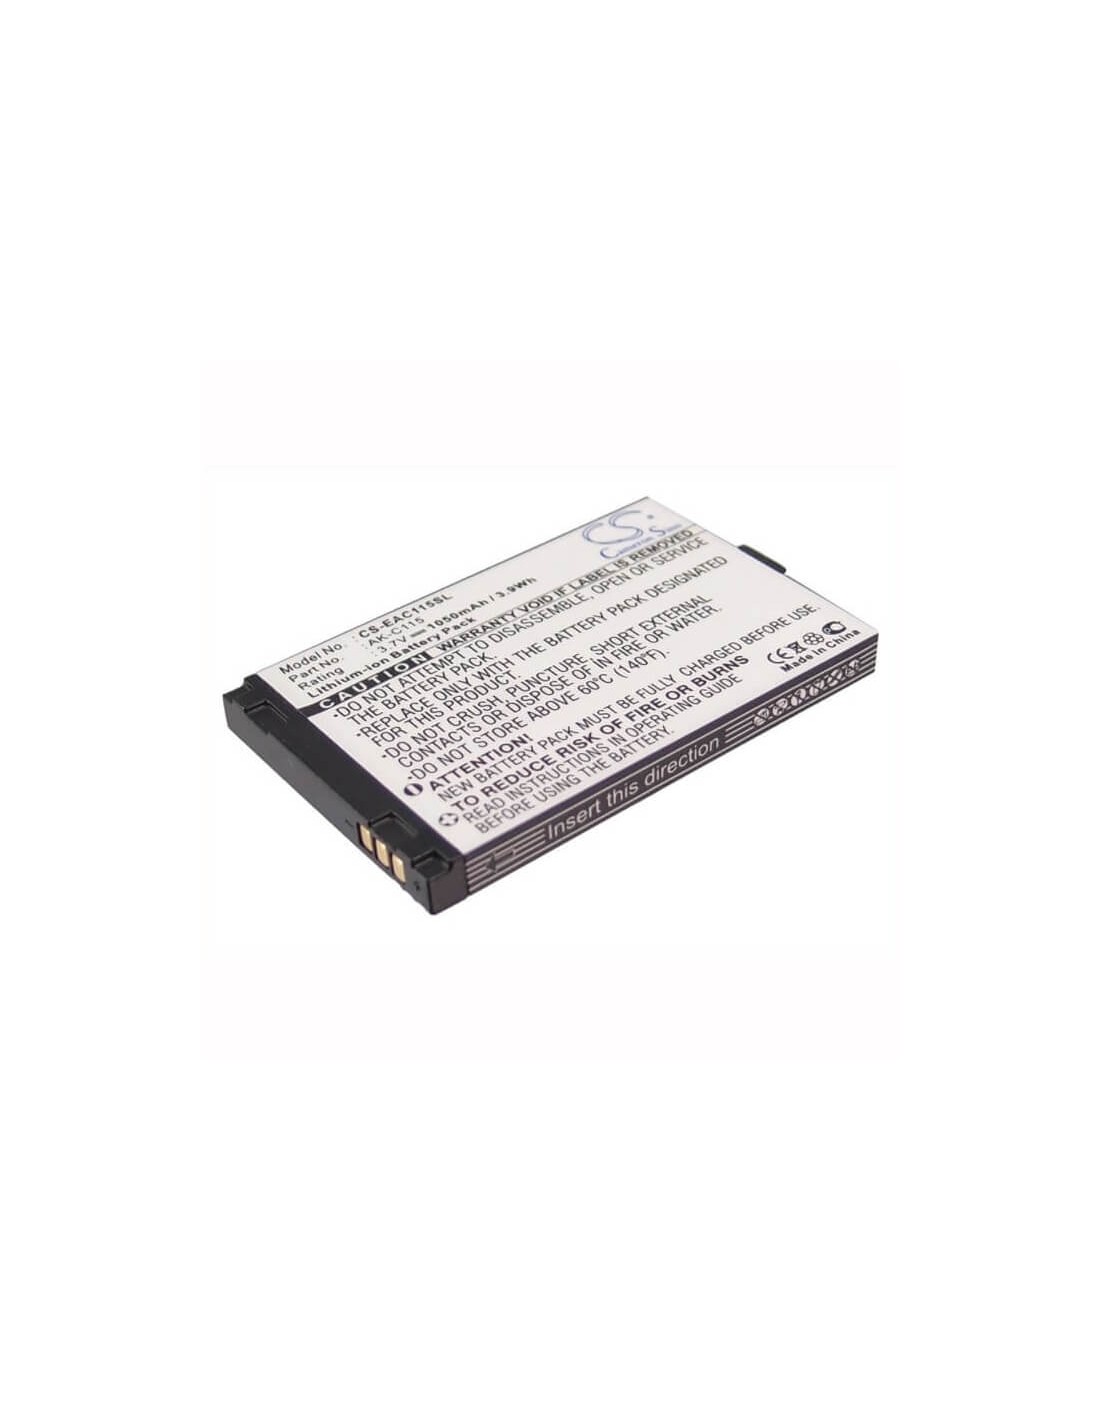 Battery for Emporia Telme C95, Telme C96, Telme C100 3.7V, 1050mAh - 3.89Wh